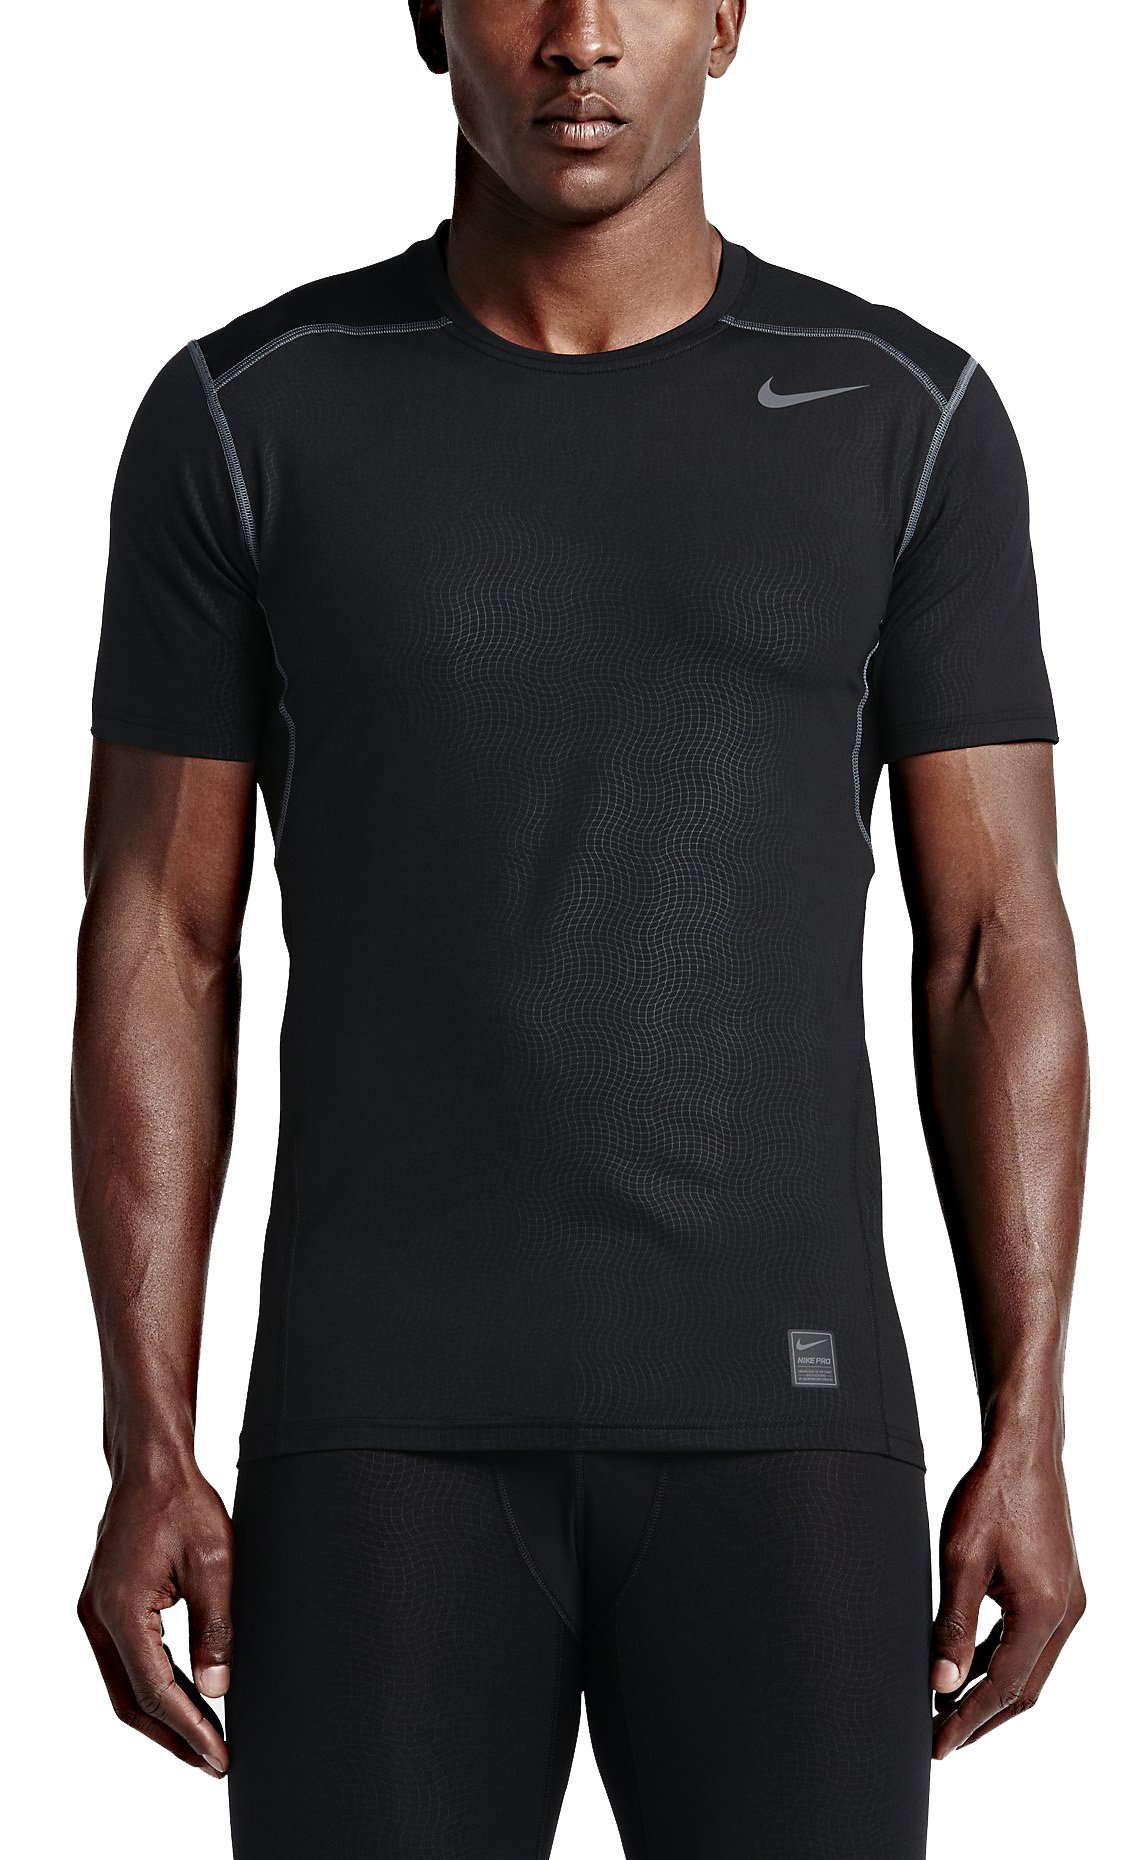 Compression T-shirt Nike HYPERCOOL FTTD SS TOP - Top4Football.com